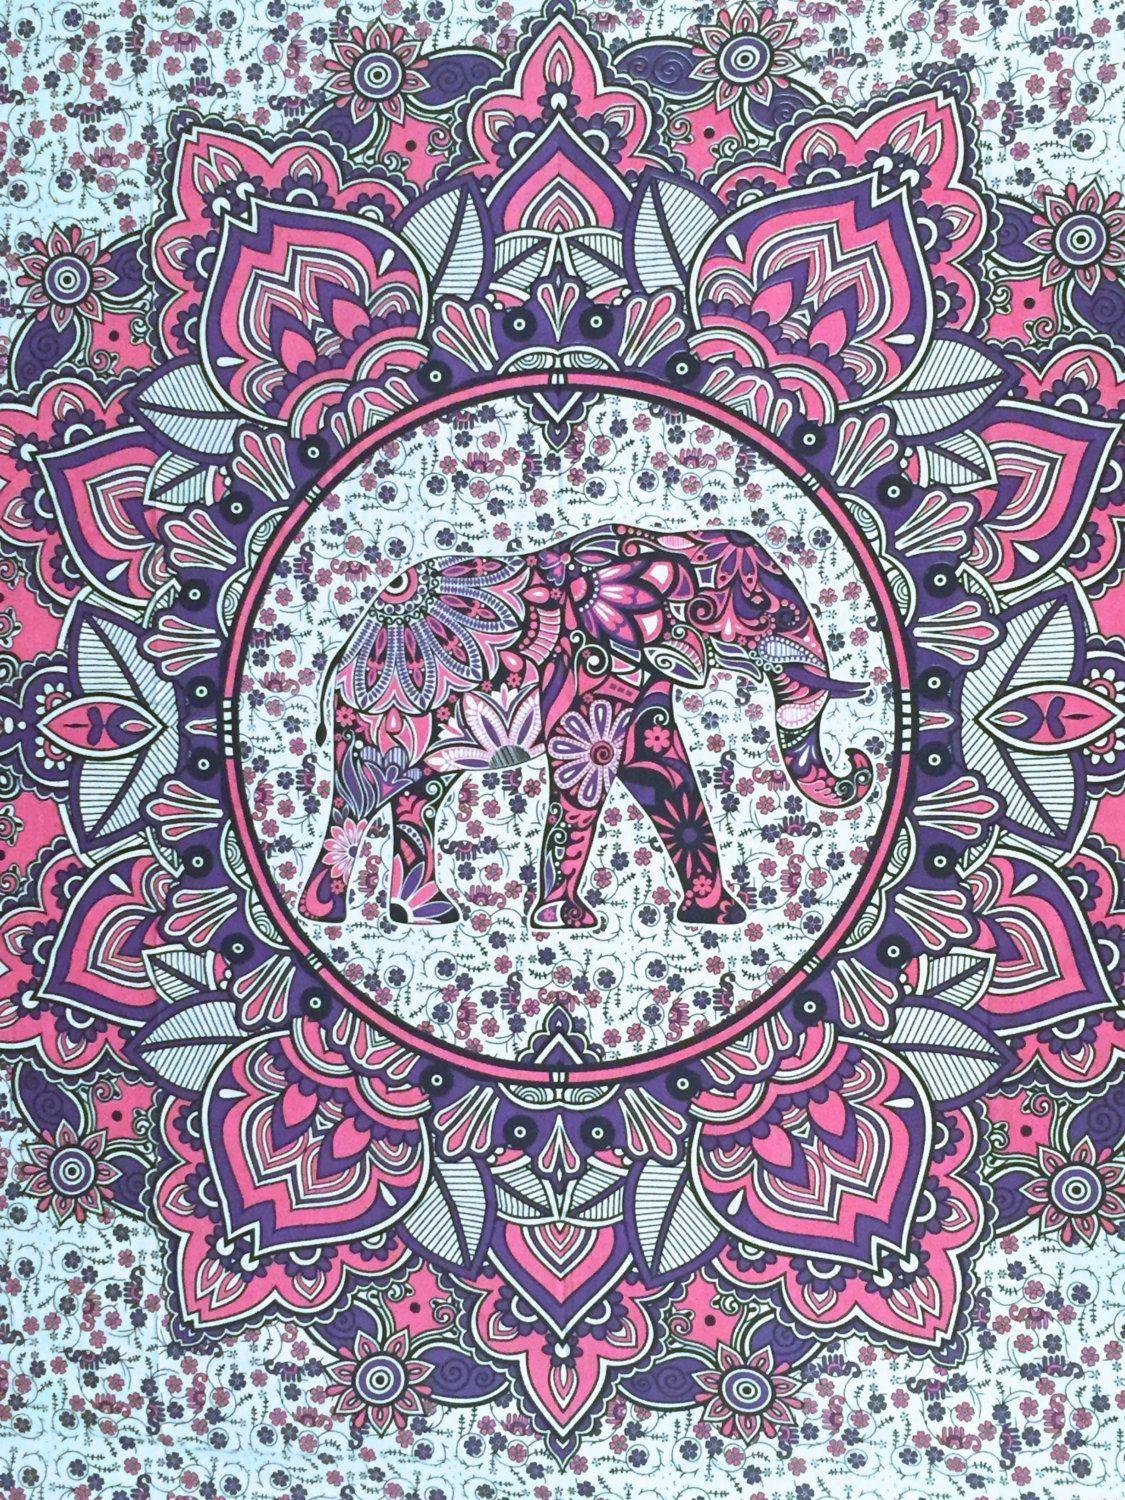 King Size Mandala Elephant Tapestry Hippie Bohemian Throw